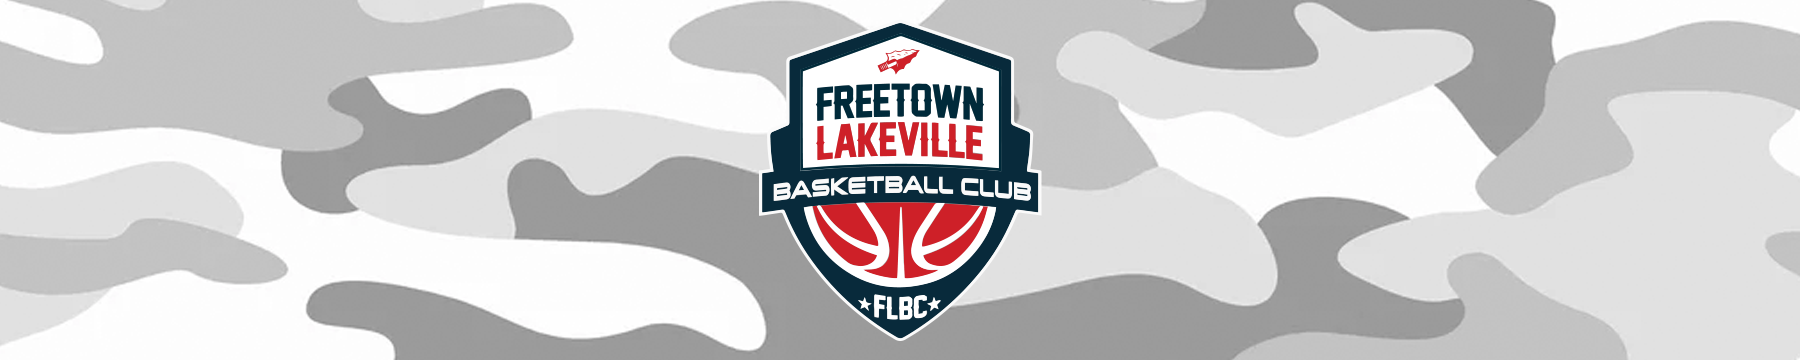 Freetown Lakeville Basketball Club